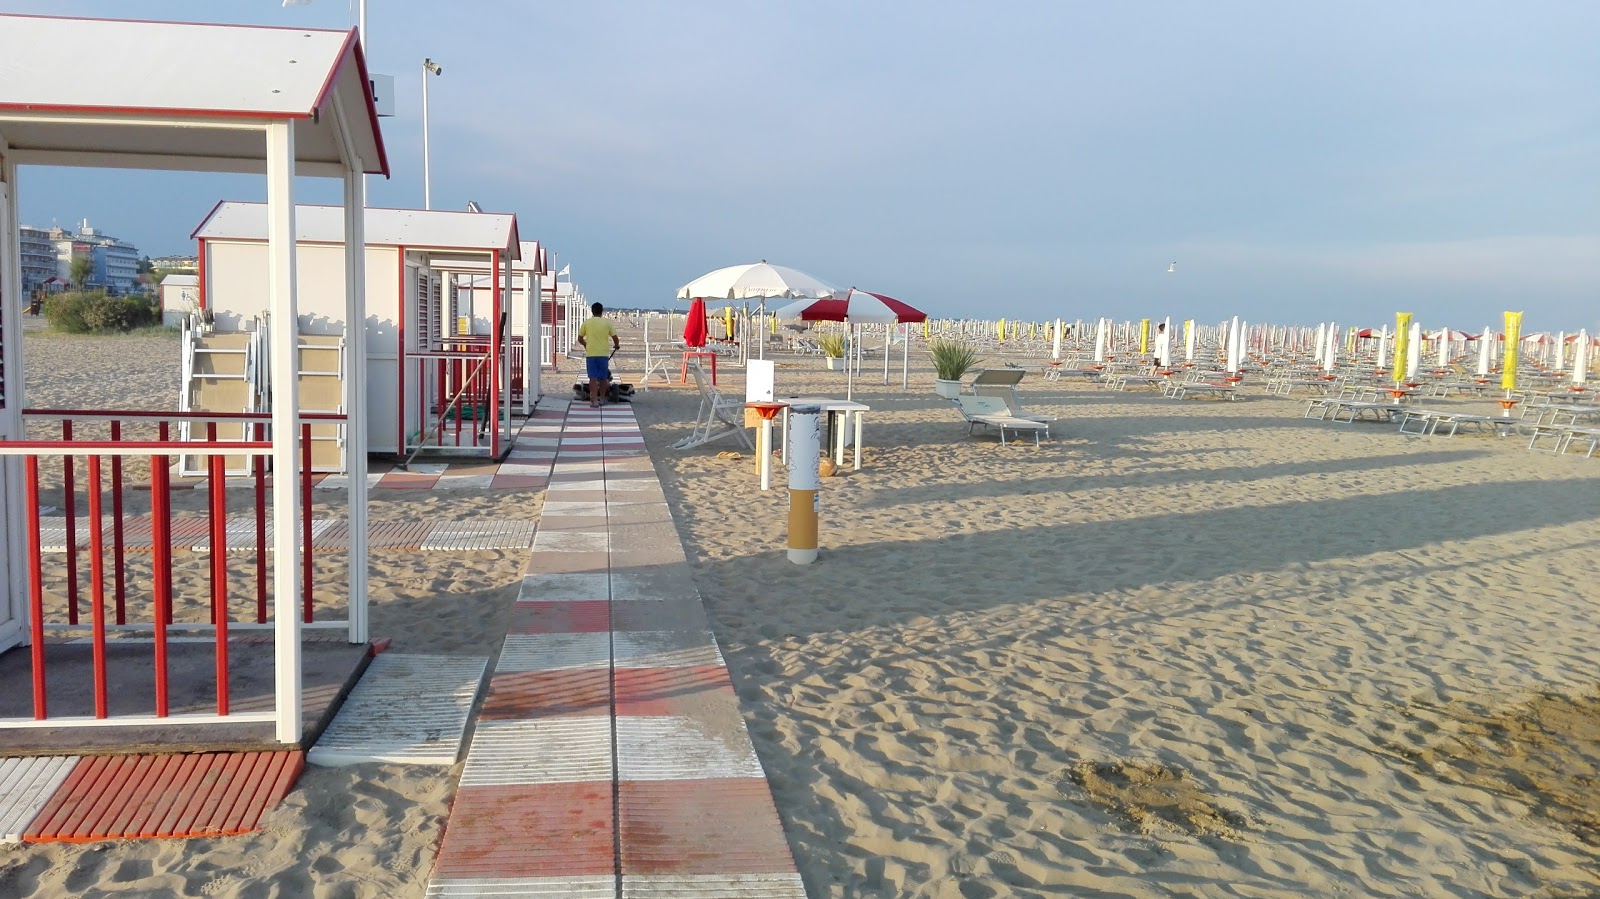 Foto de Spiaggia di Levante - lugar popular entre os apreciadores de relaxamento